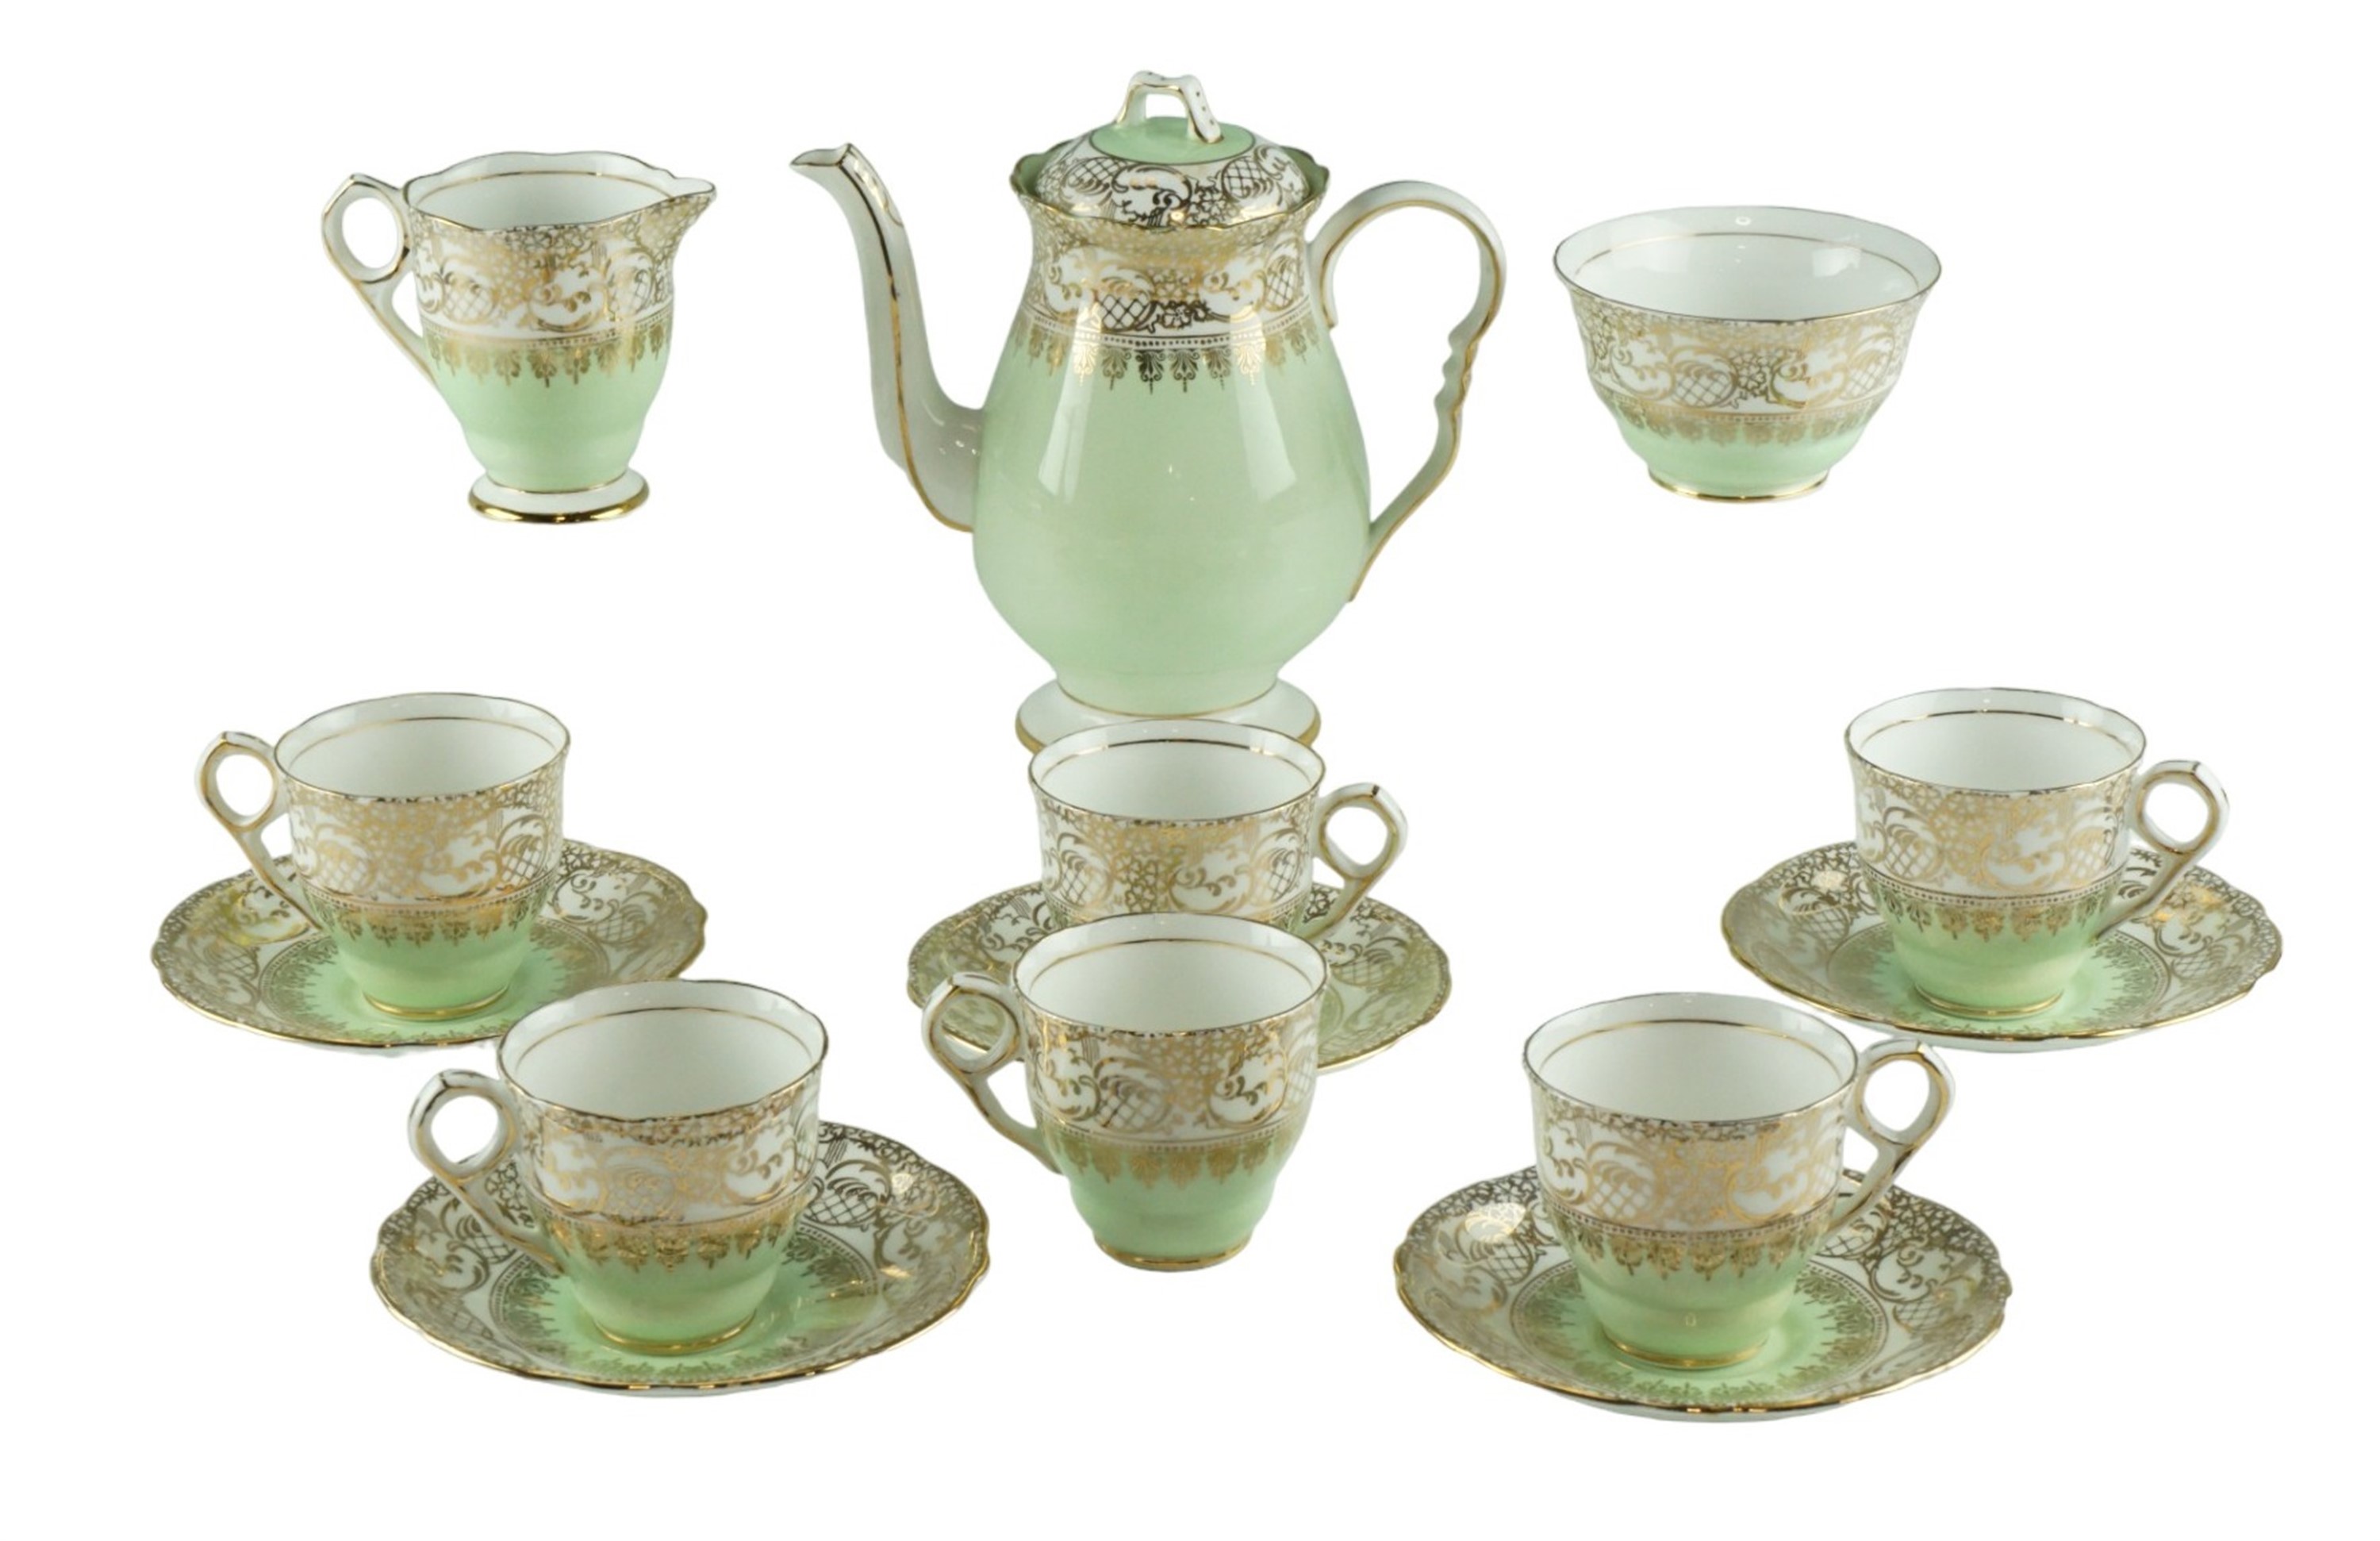 A Royal Stafford gilt decorated tea set